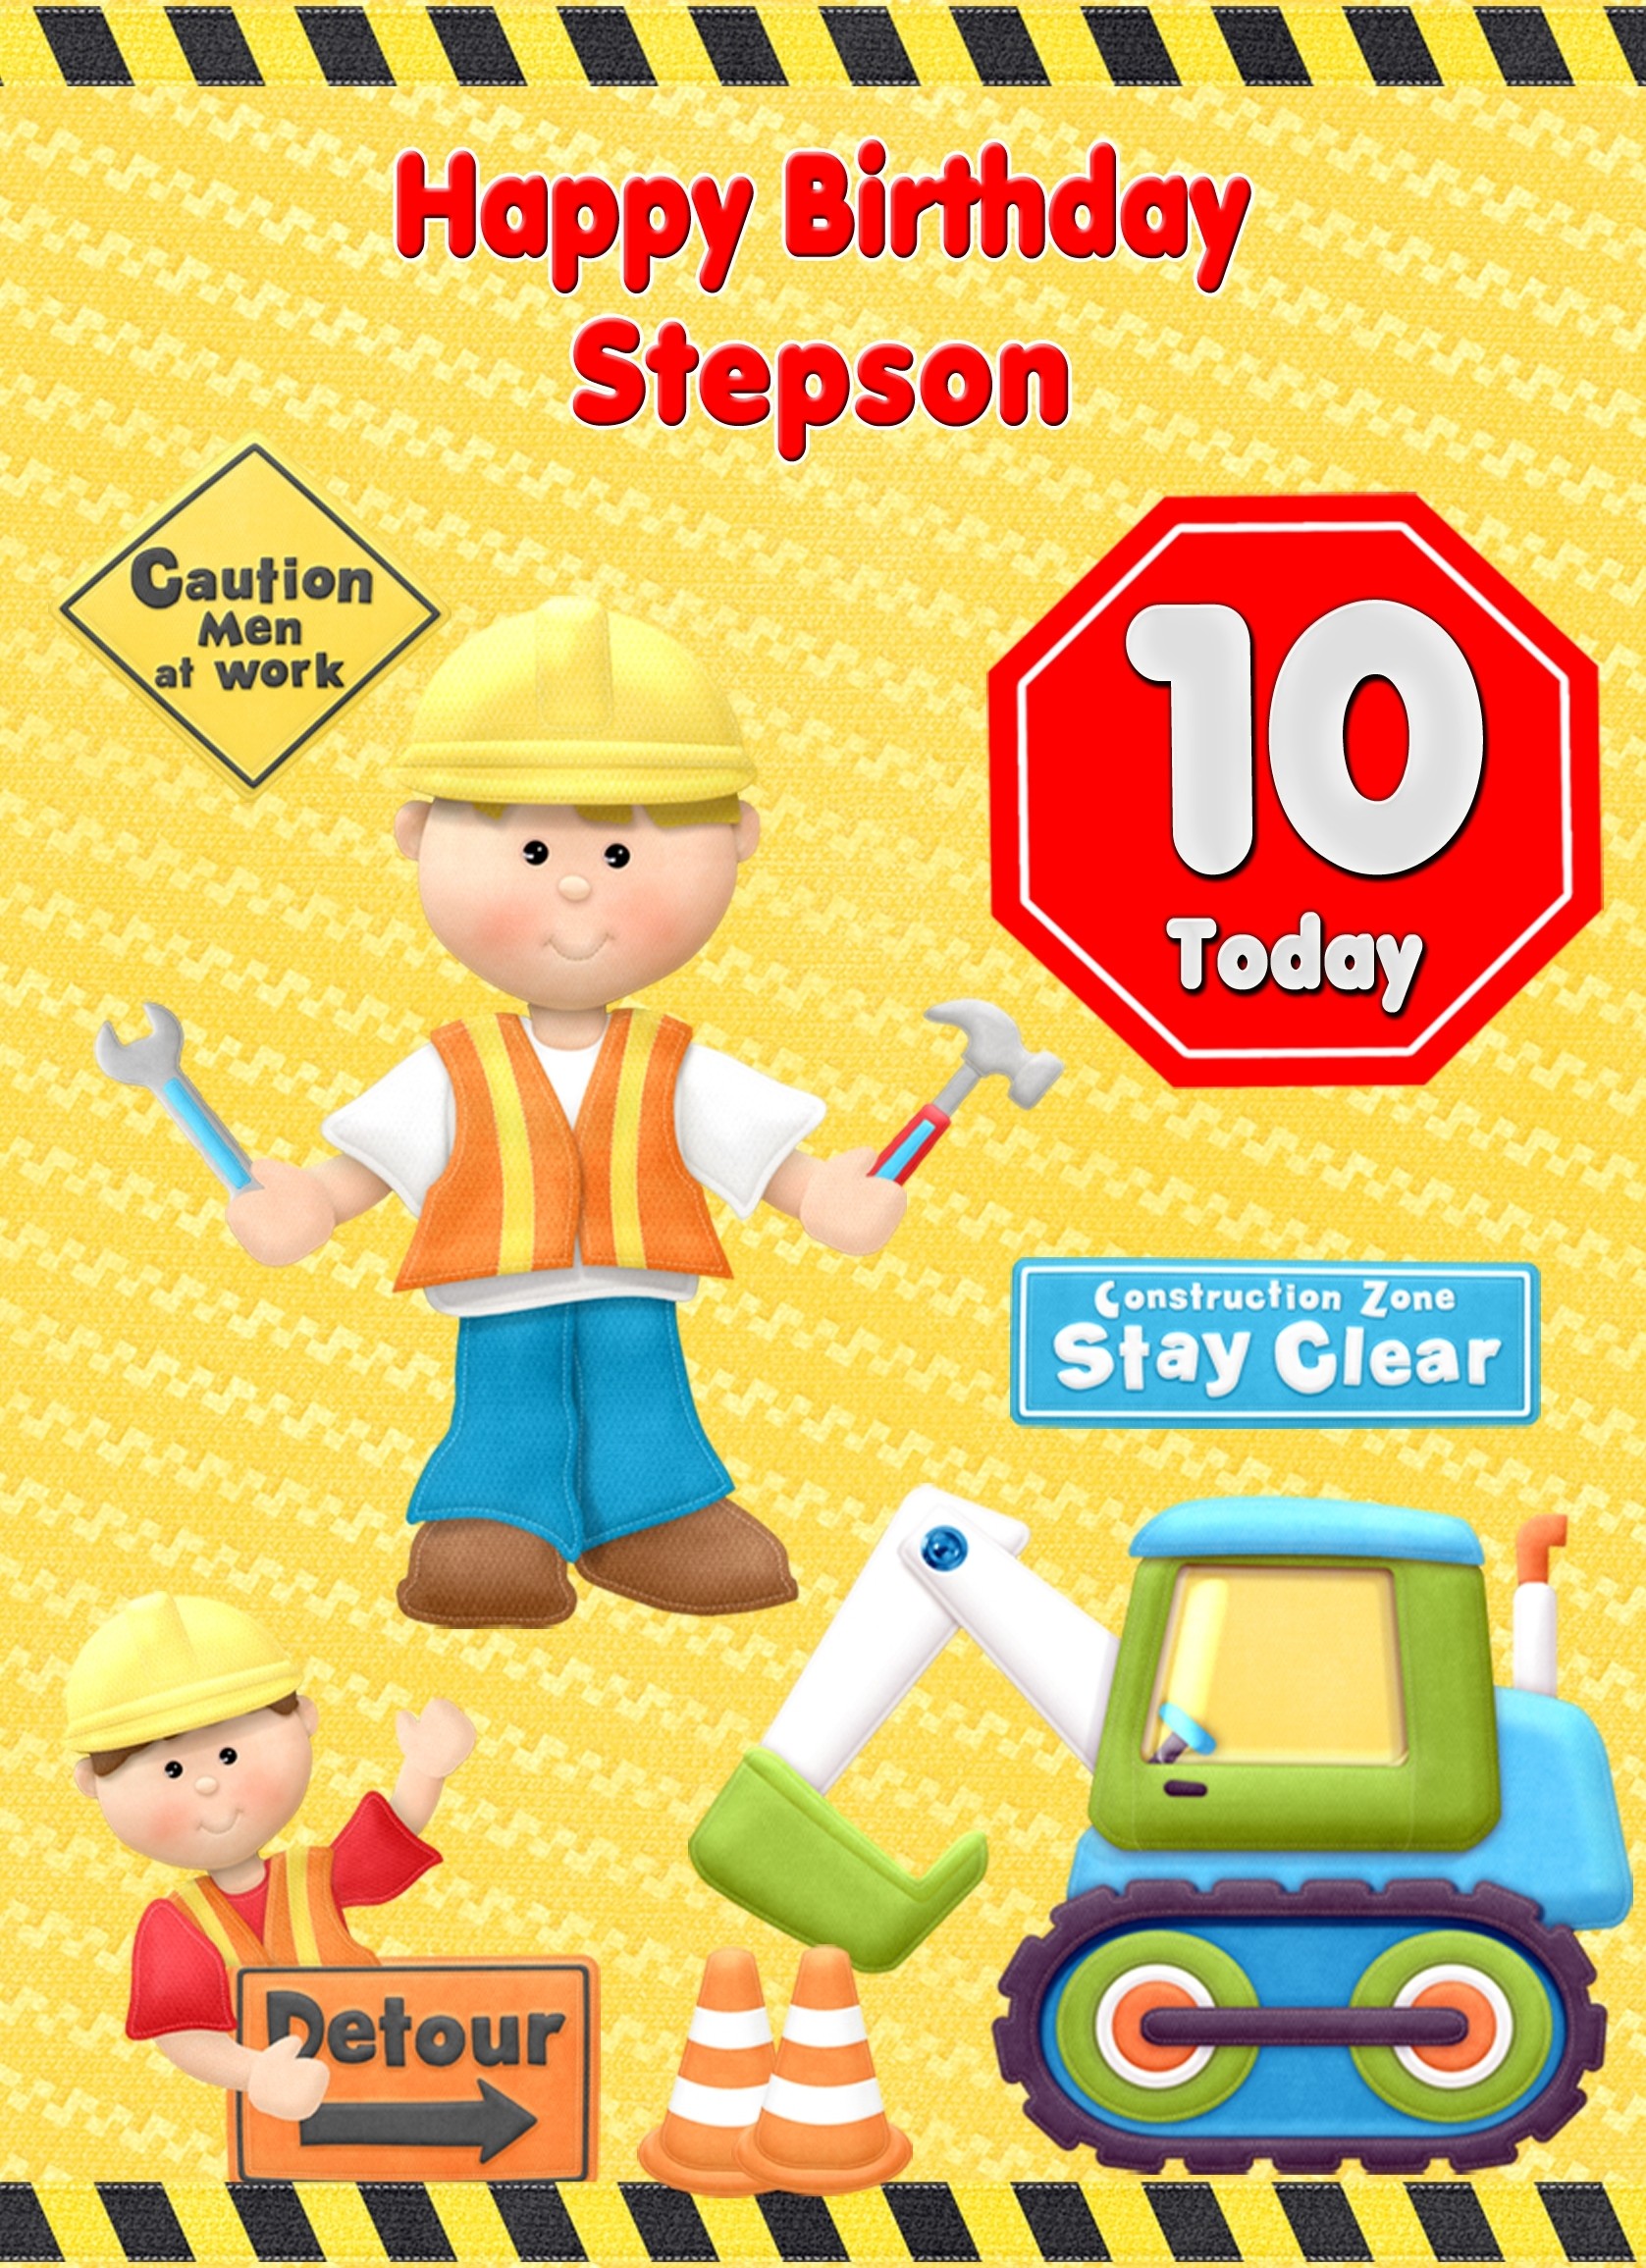 Kids 10th Birthday Builder Cartoon Card for Stepson